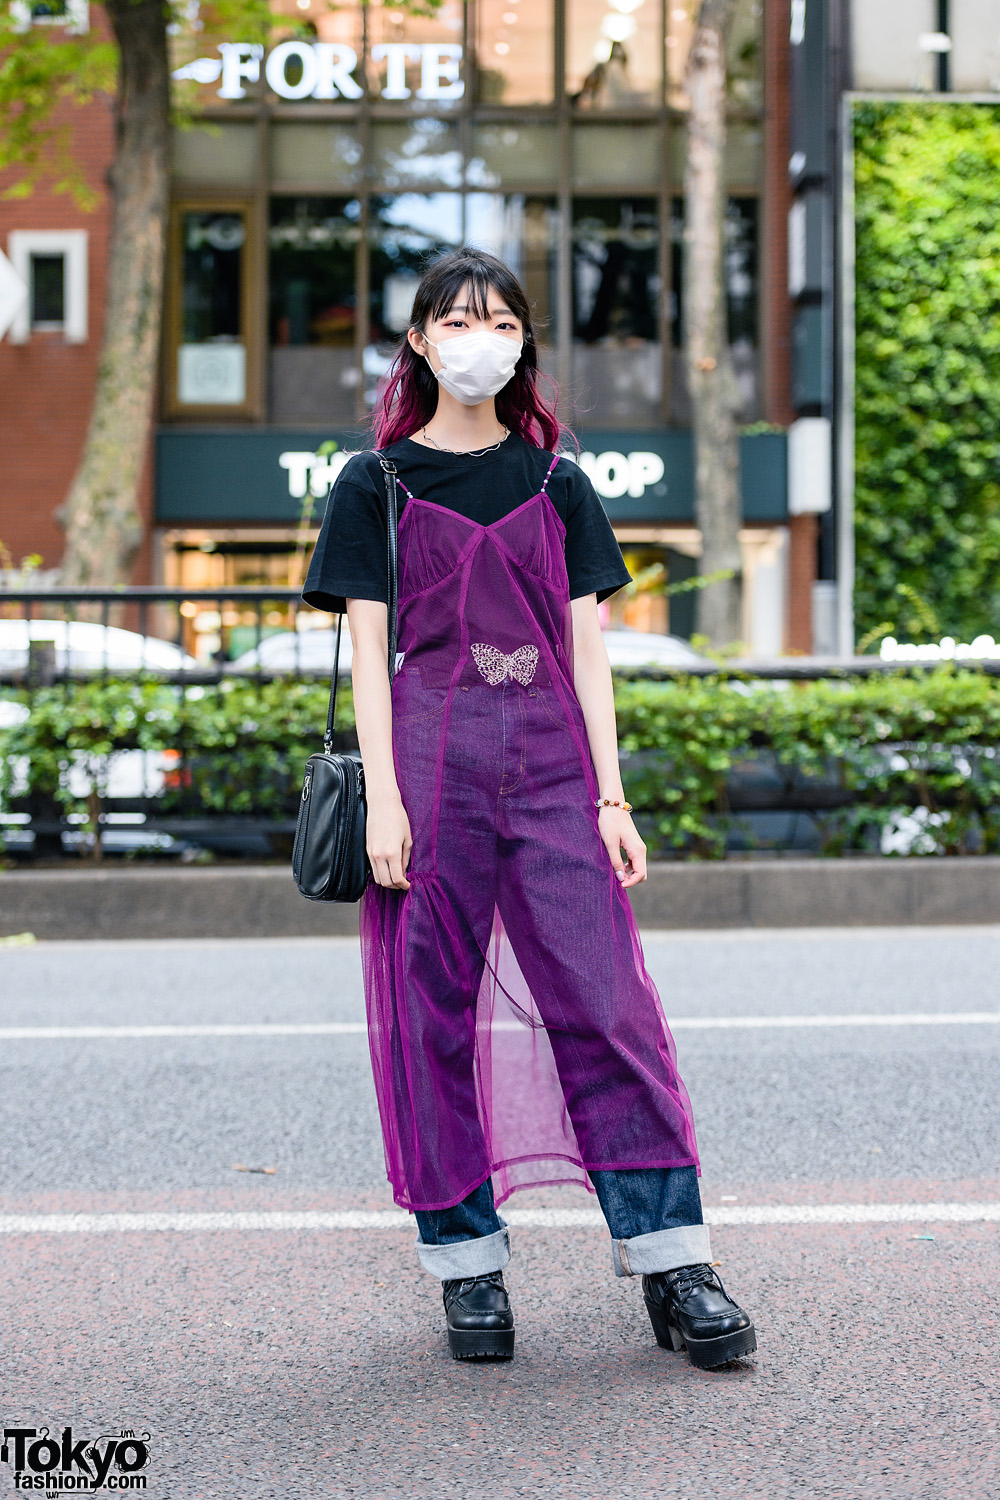 Harajuku Streetwear Style w/ Purple Hair, Lace Gloves, Vintage